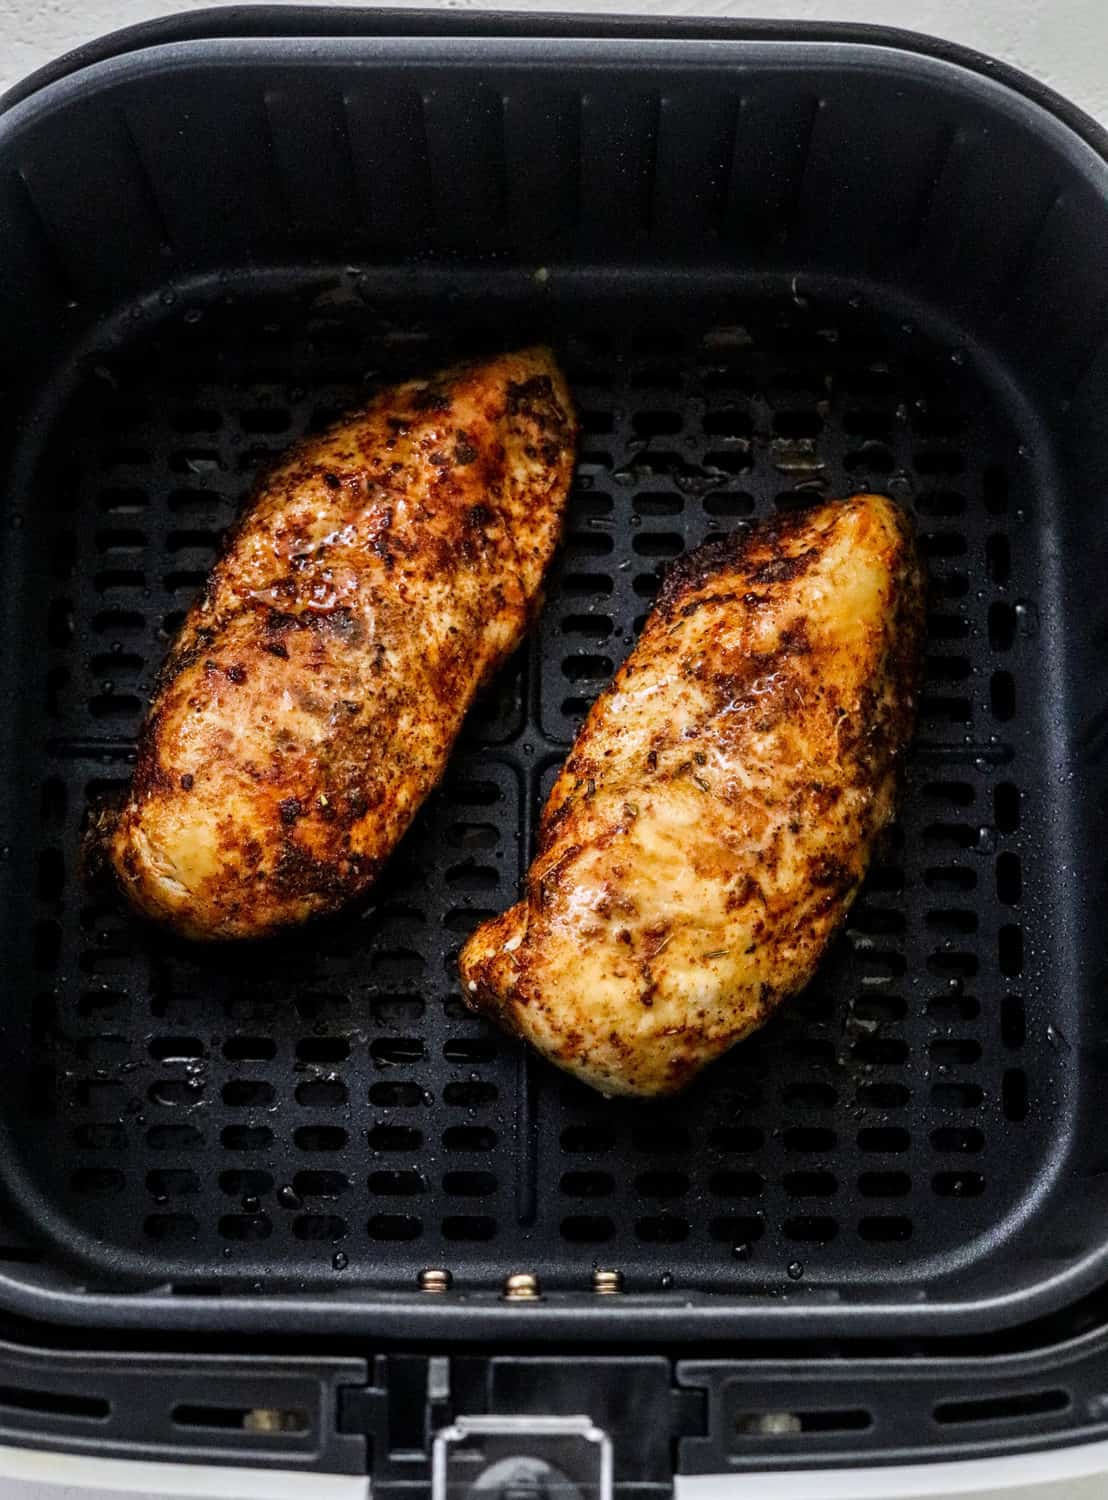 Cooked crispy boneless chicken breast in an air fryer basket